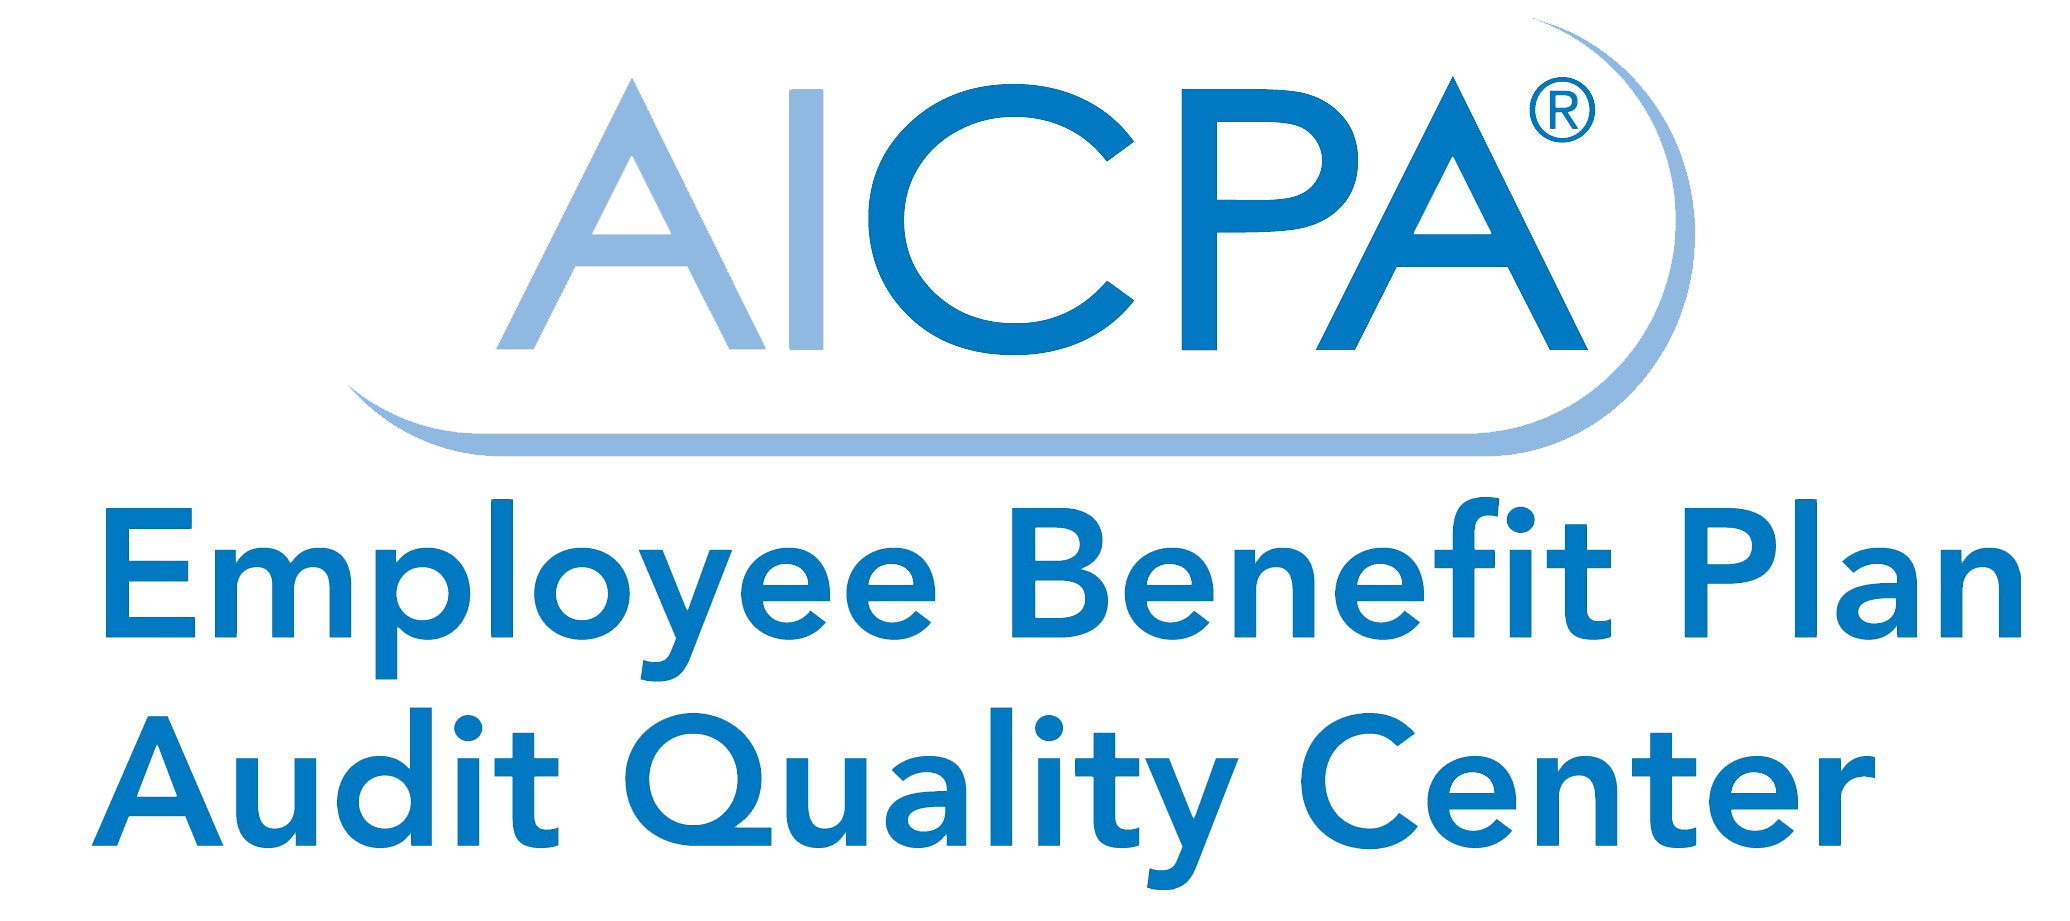 AICOA - Employee Benefit Plan Audit Quality Center